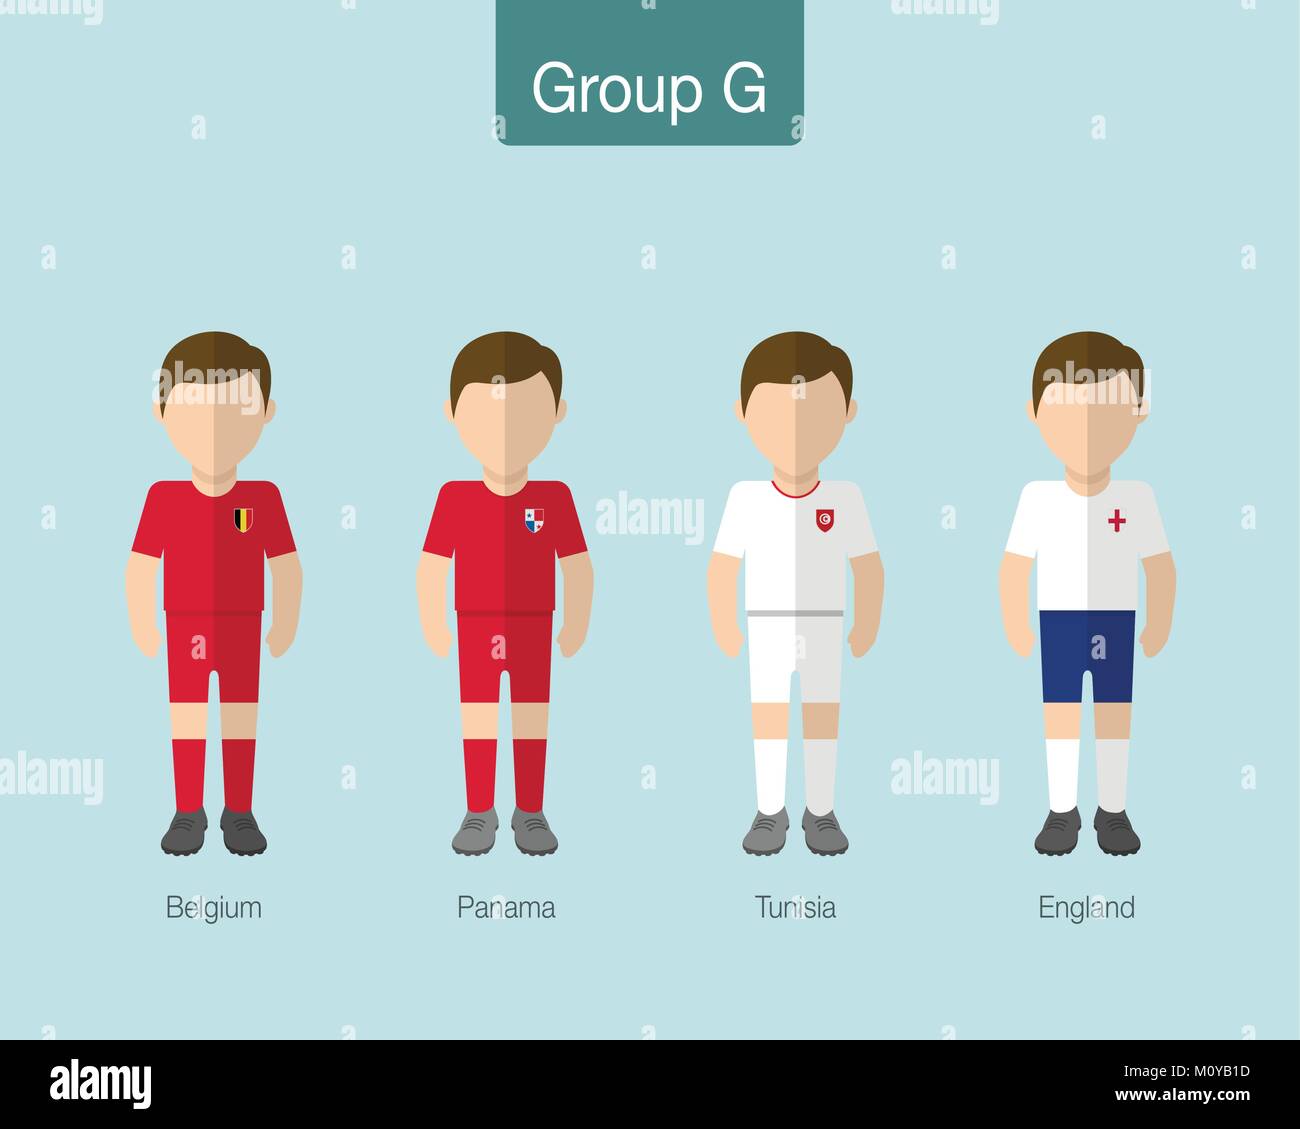 2018 Soccer or football team uniform. Group G with BELGIUM, PANAMA, TUNISIA, ENGLAND. Flat design. Vector illustration. Stock Vector